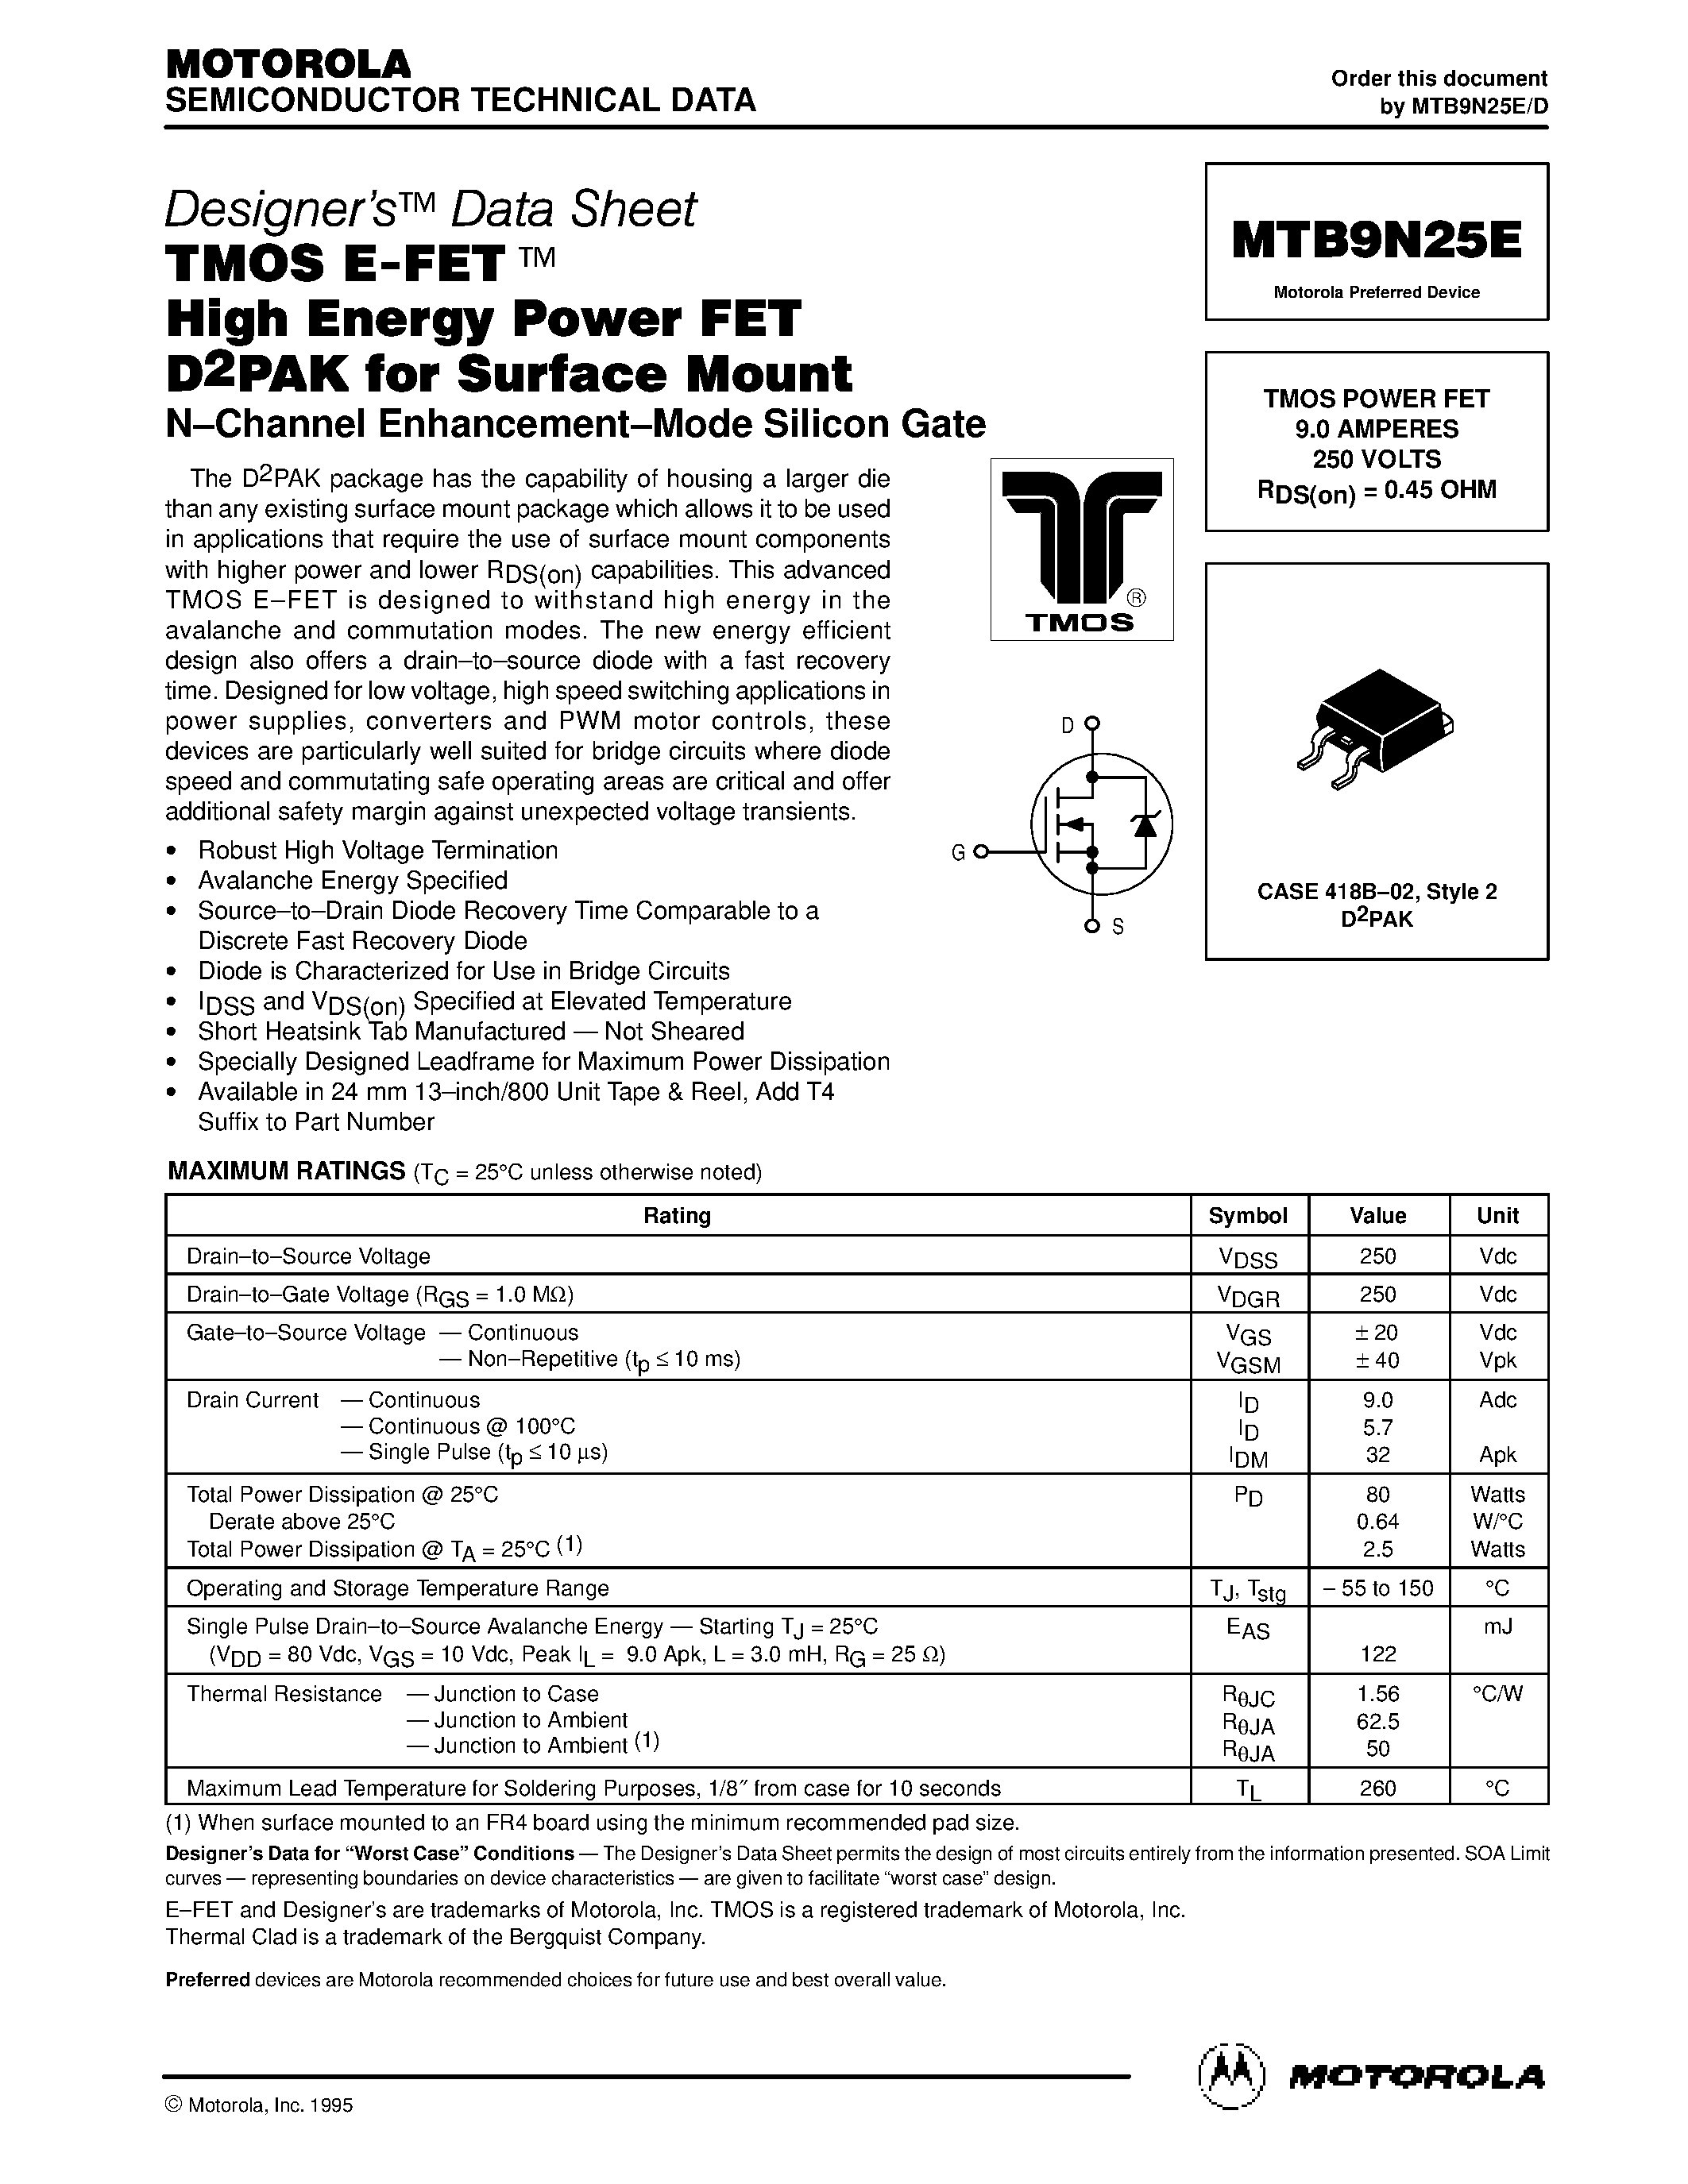 Даташит MTB9N25E - TMOS POWER FET 9.0 AMPERES 250 VOLTS страница 1